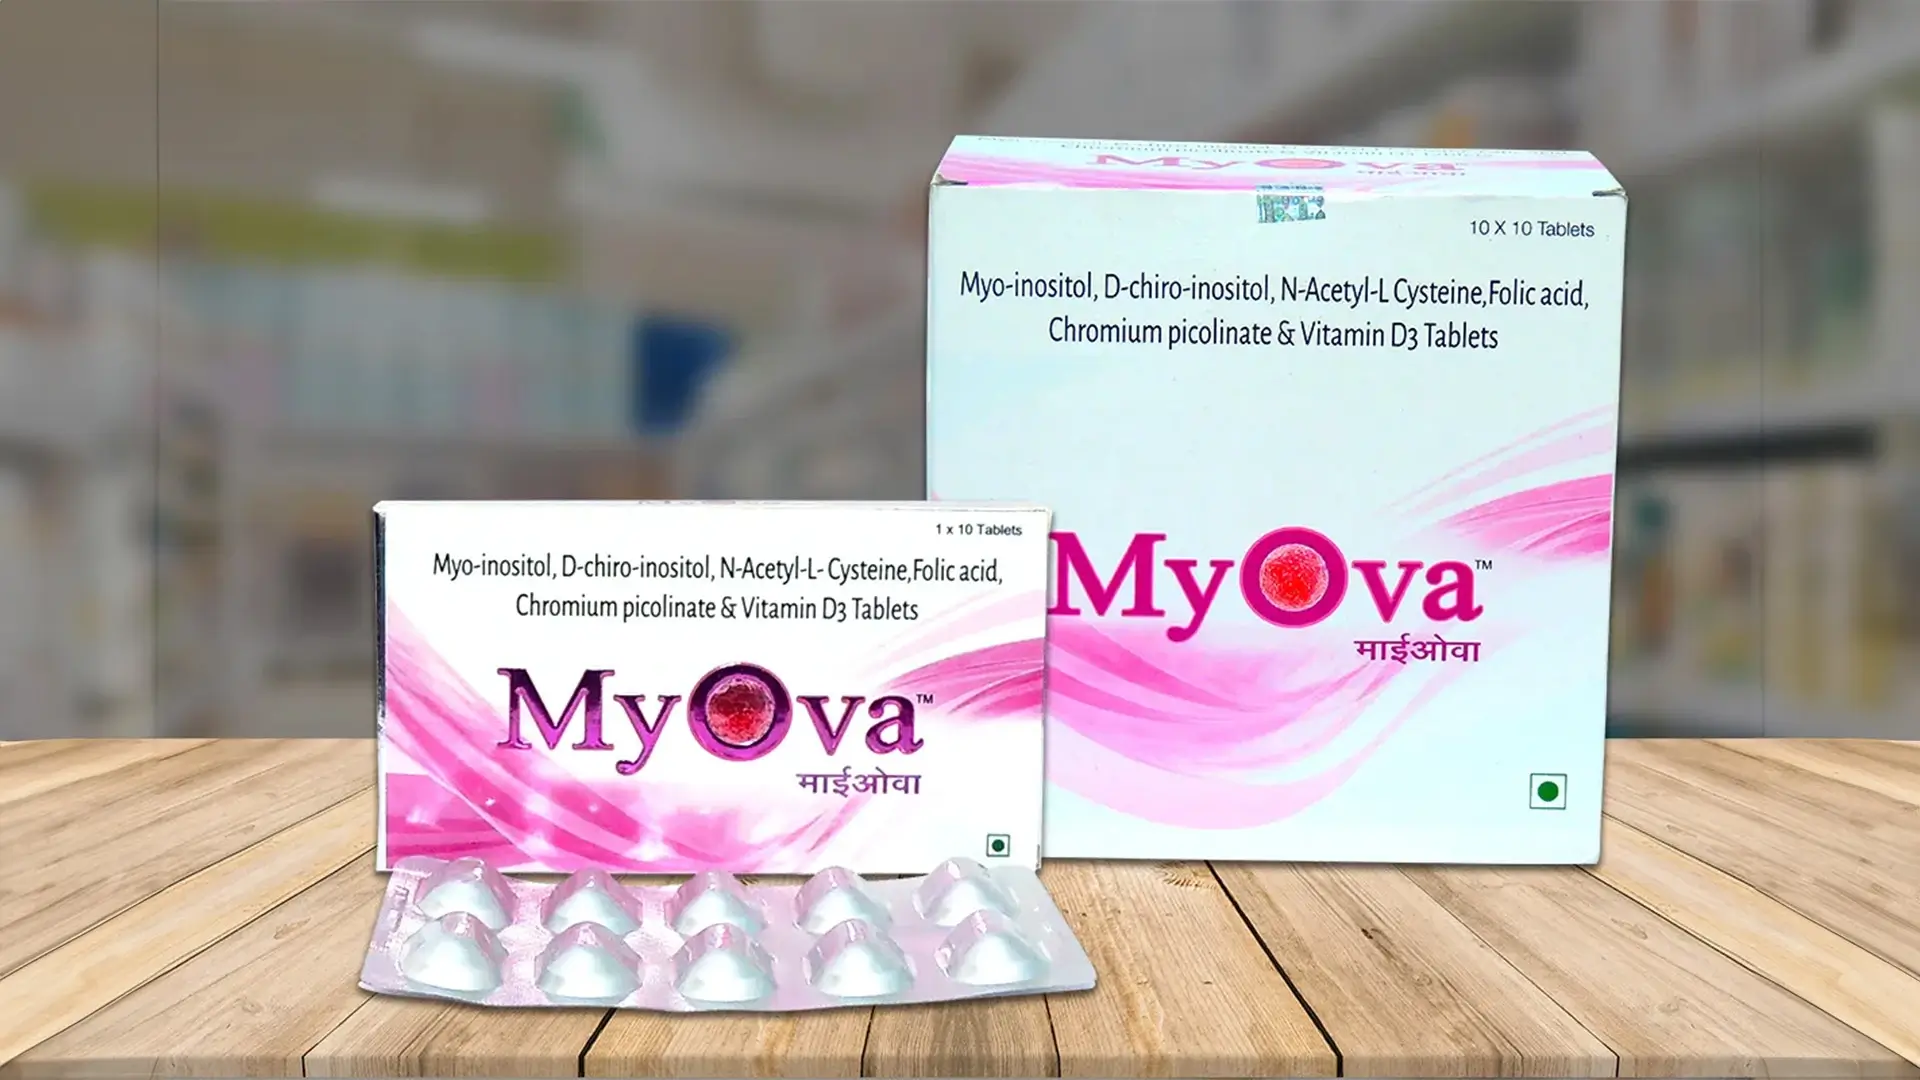 MyOva polycystic ovarian syndrome